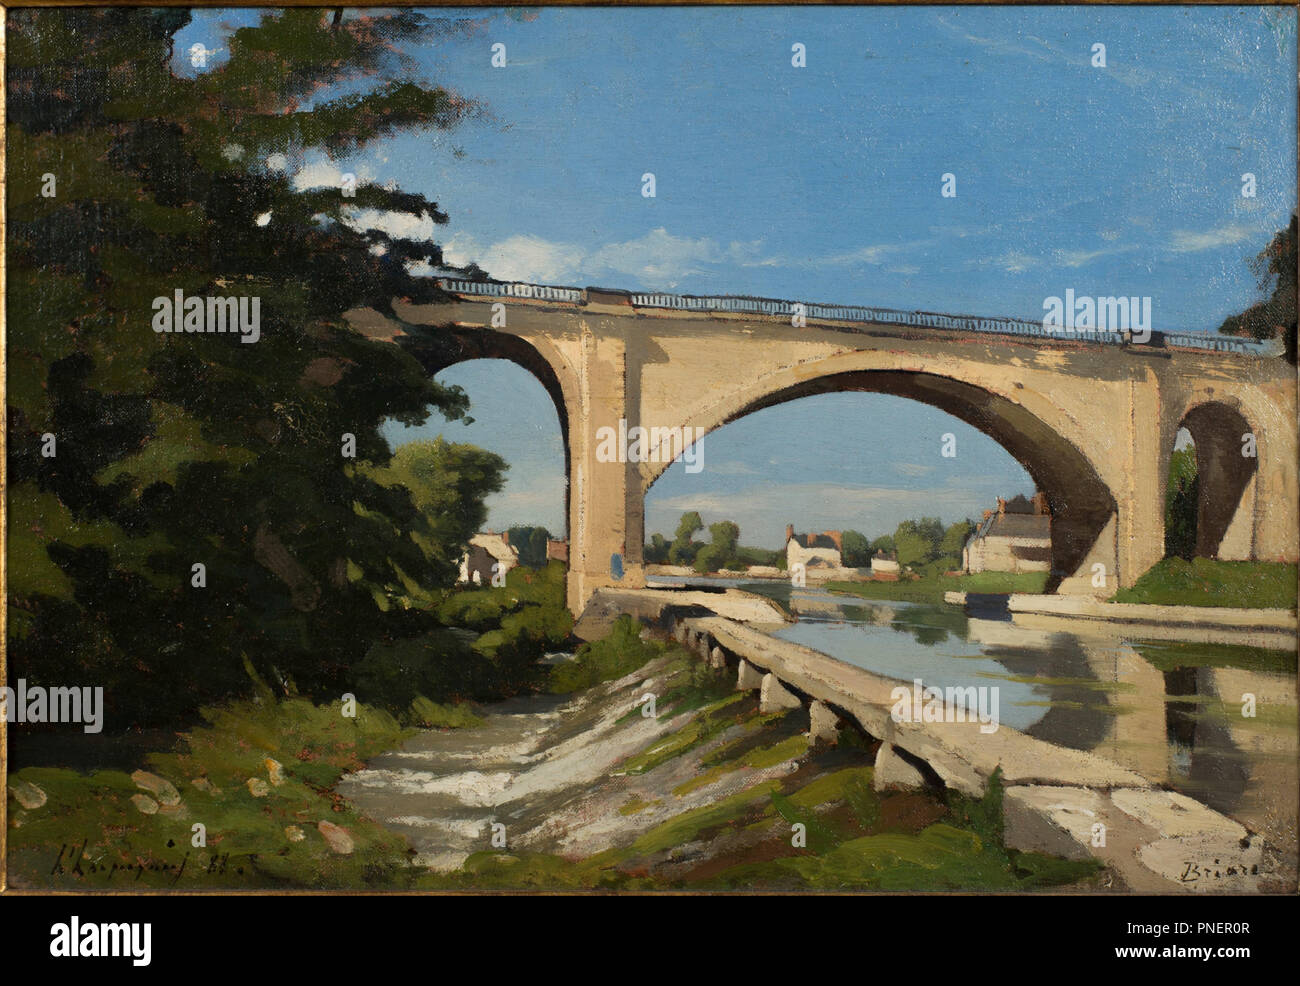 The Railroad Bridge at Briare. Date/Period: 1888. Painting. Oil on canvas. Author: HENRI HARPIGNIES. Stock Photo